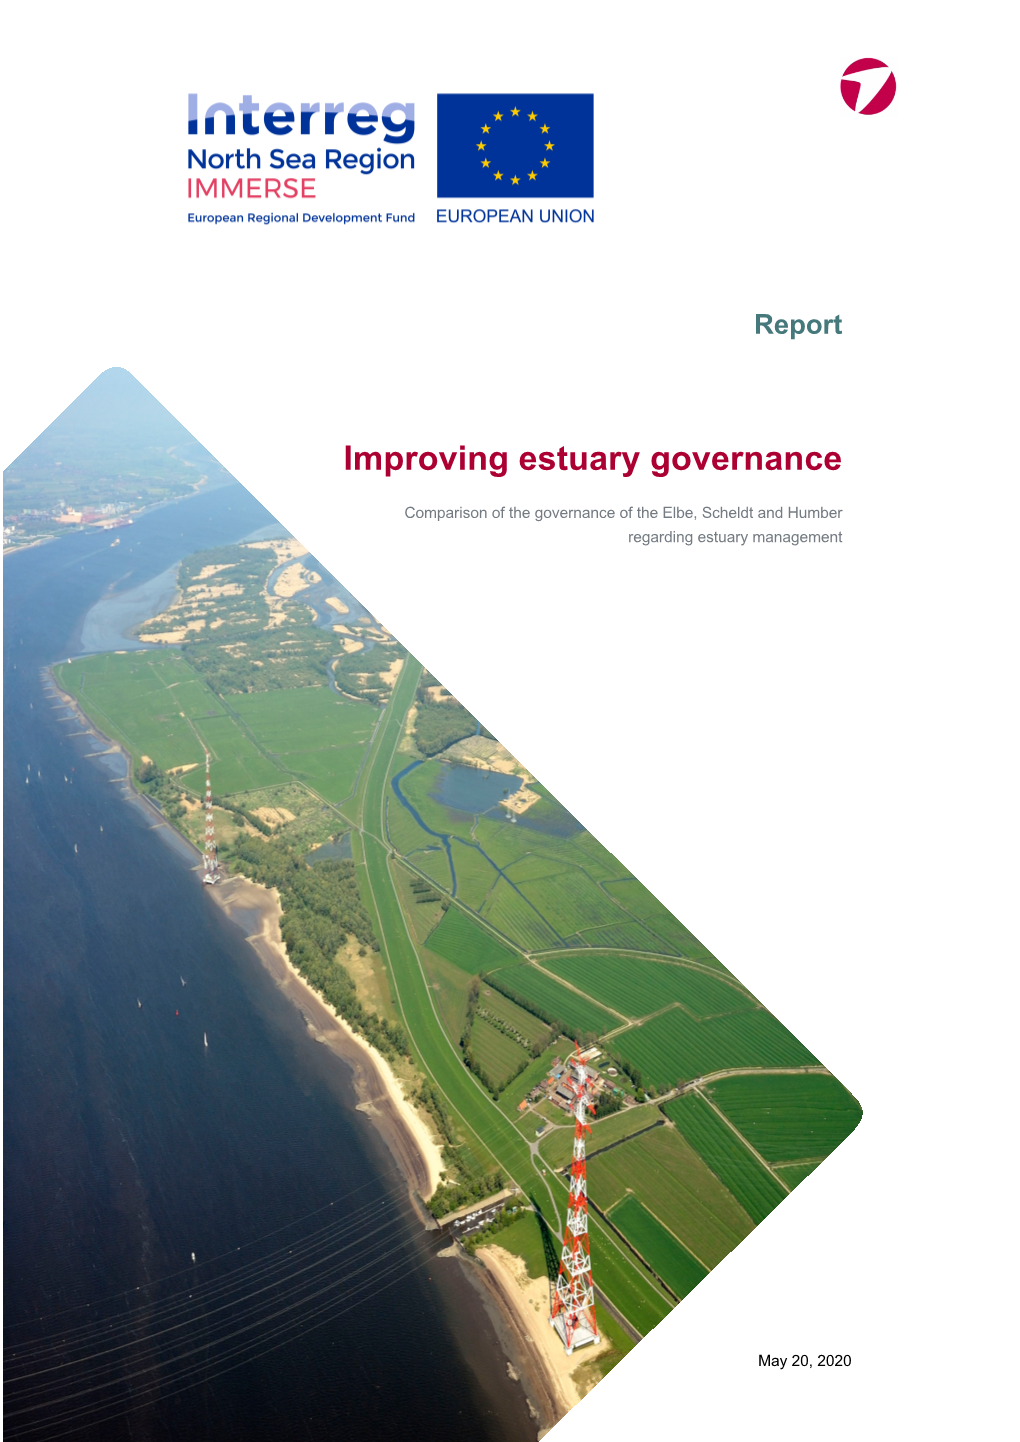 A Study on How to Improve Estuary Governance